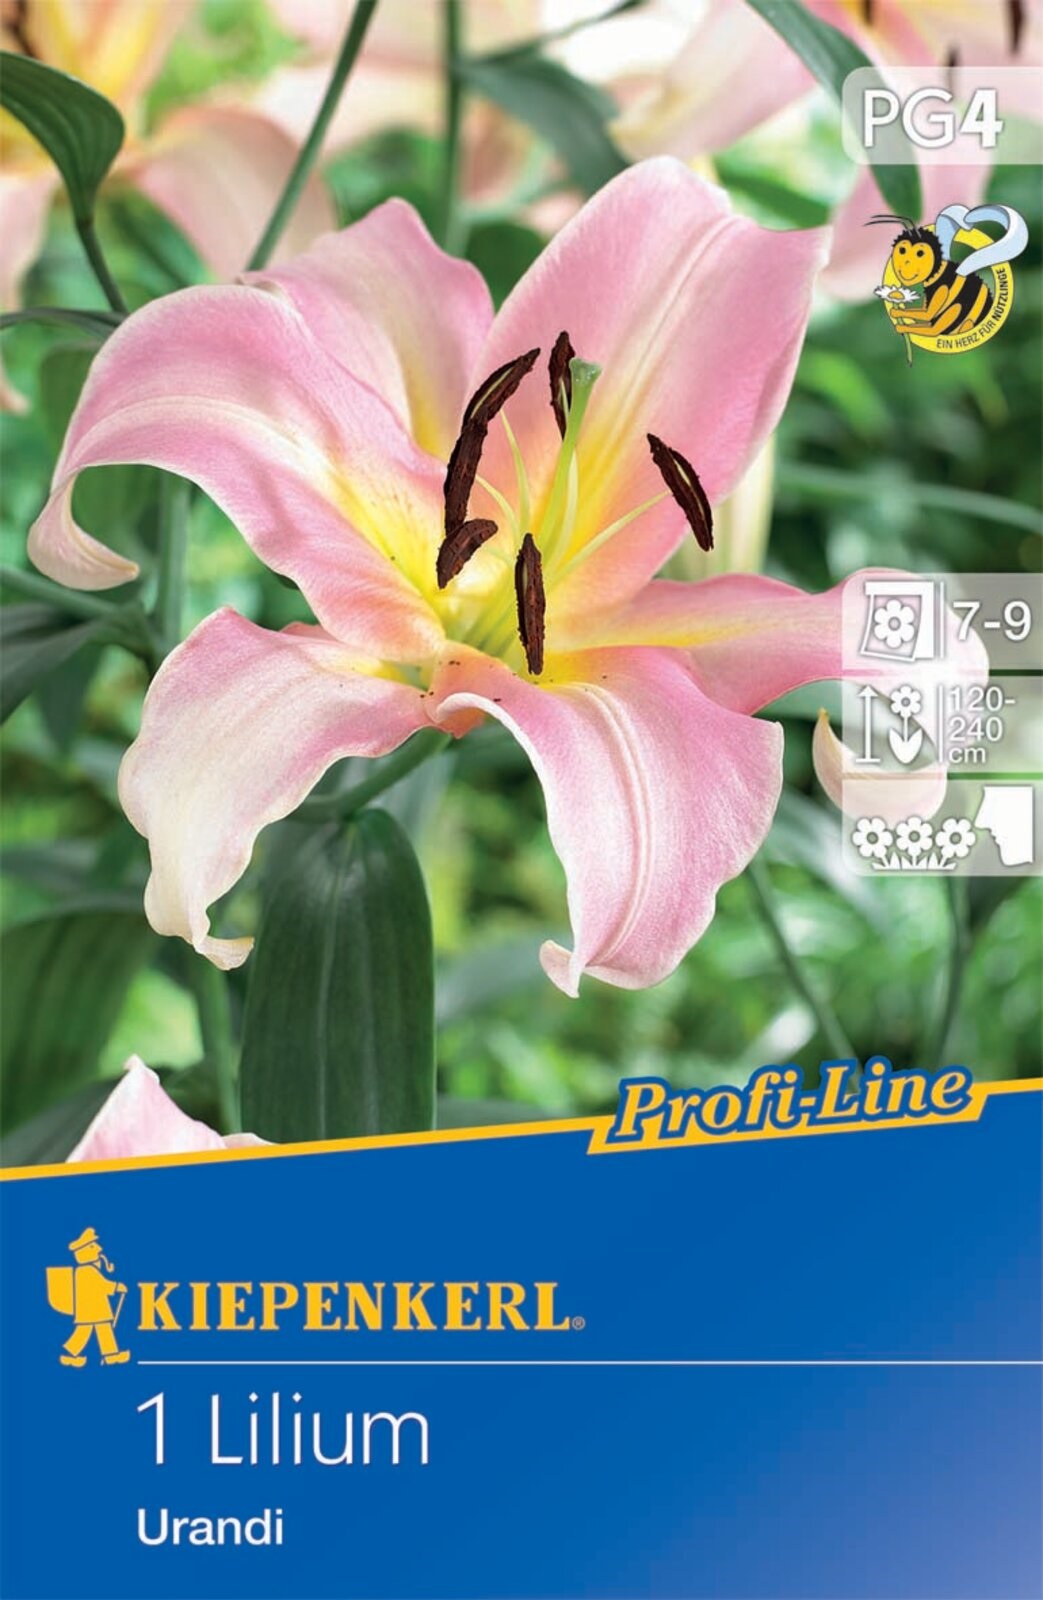 Flower bulb Lily Urandi Profi-Line Kiepenkerl 1 pc